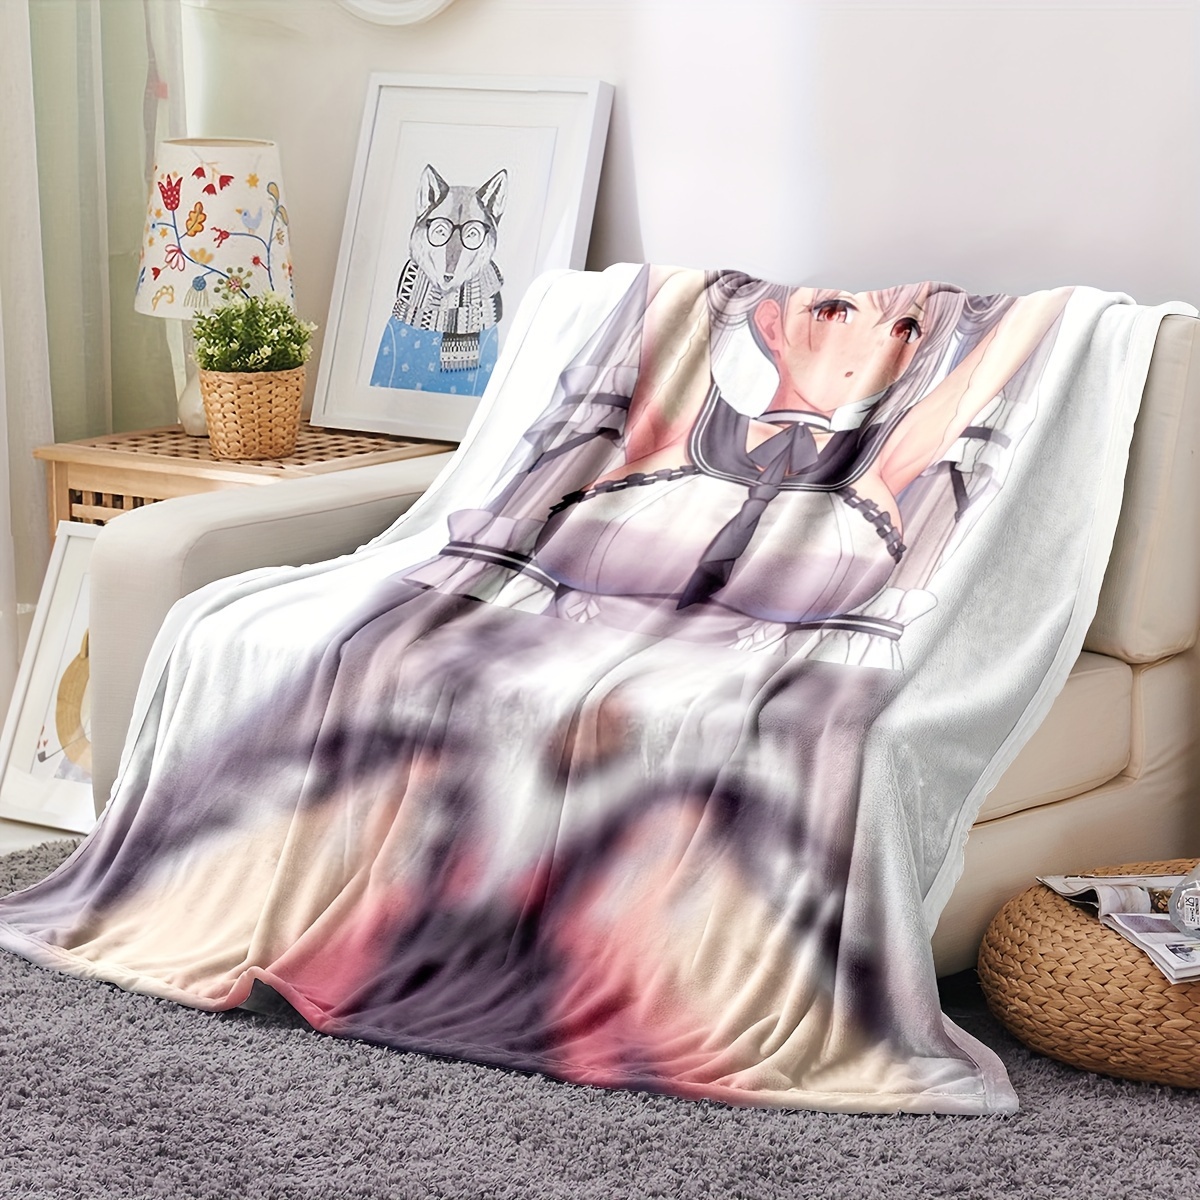 Anime Blanket Gifts for Girls Boys-50x60 Inches Soft Flannel Blanket Anime Gifts for Teen Girls Kids Comfy Anime Lover Stuff Kawaii Anime Room Decor